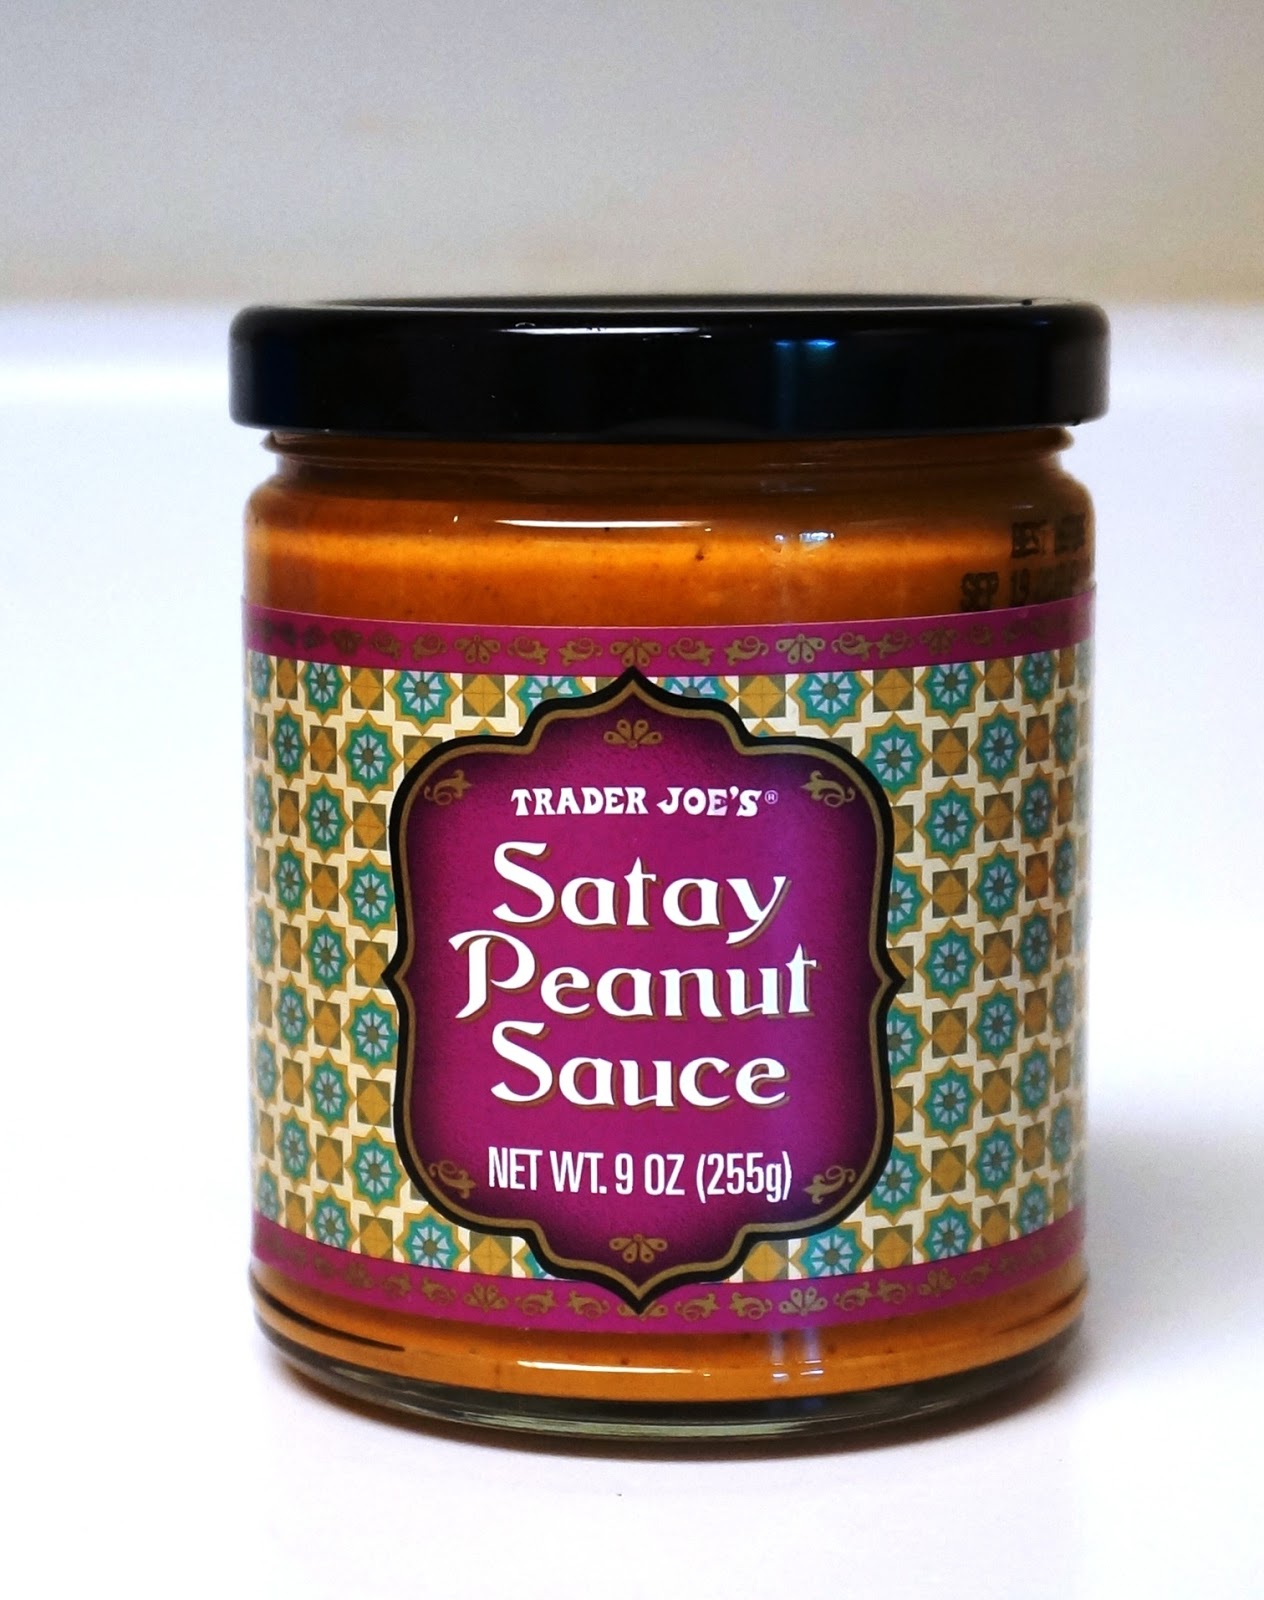 Exploring Trader Joe's: Trader Joe's Satay Peanut Sauce